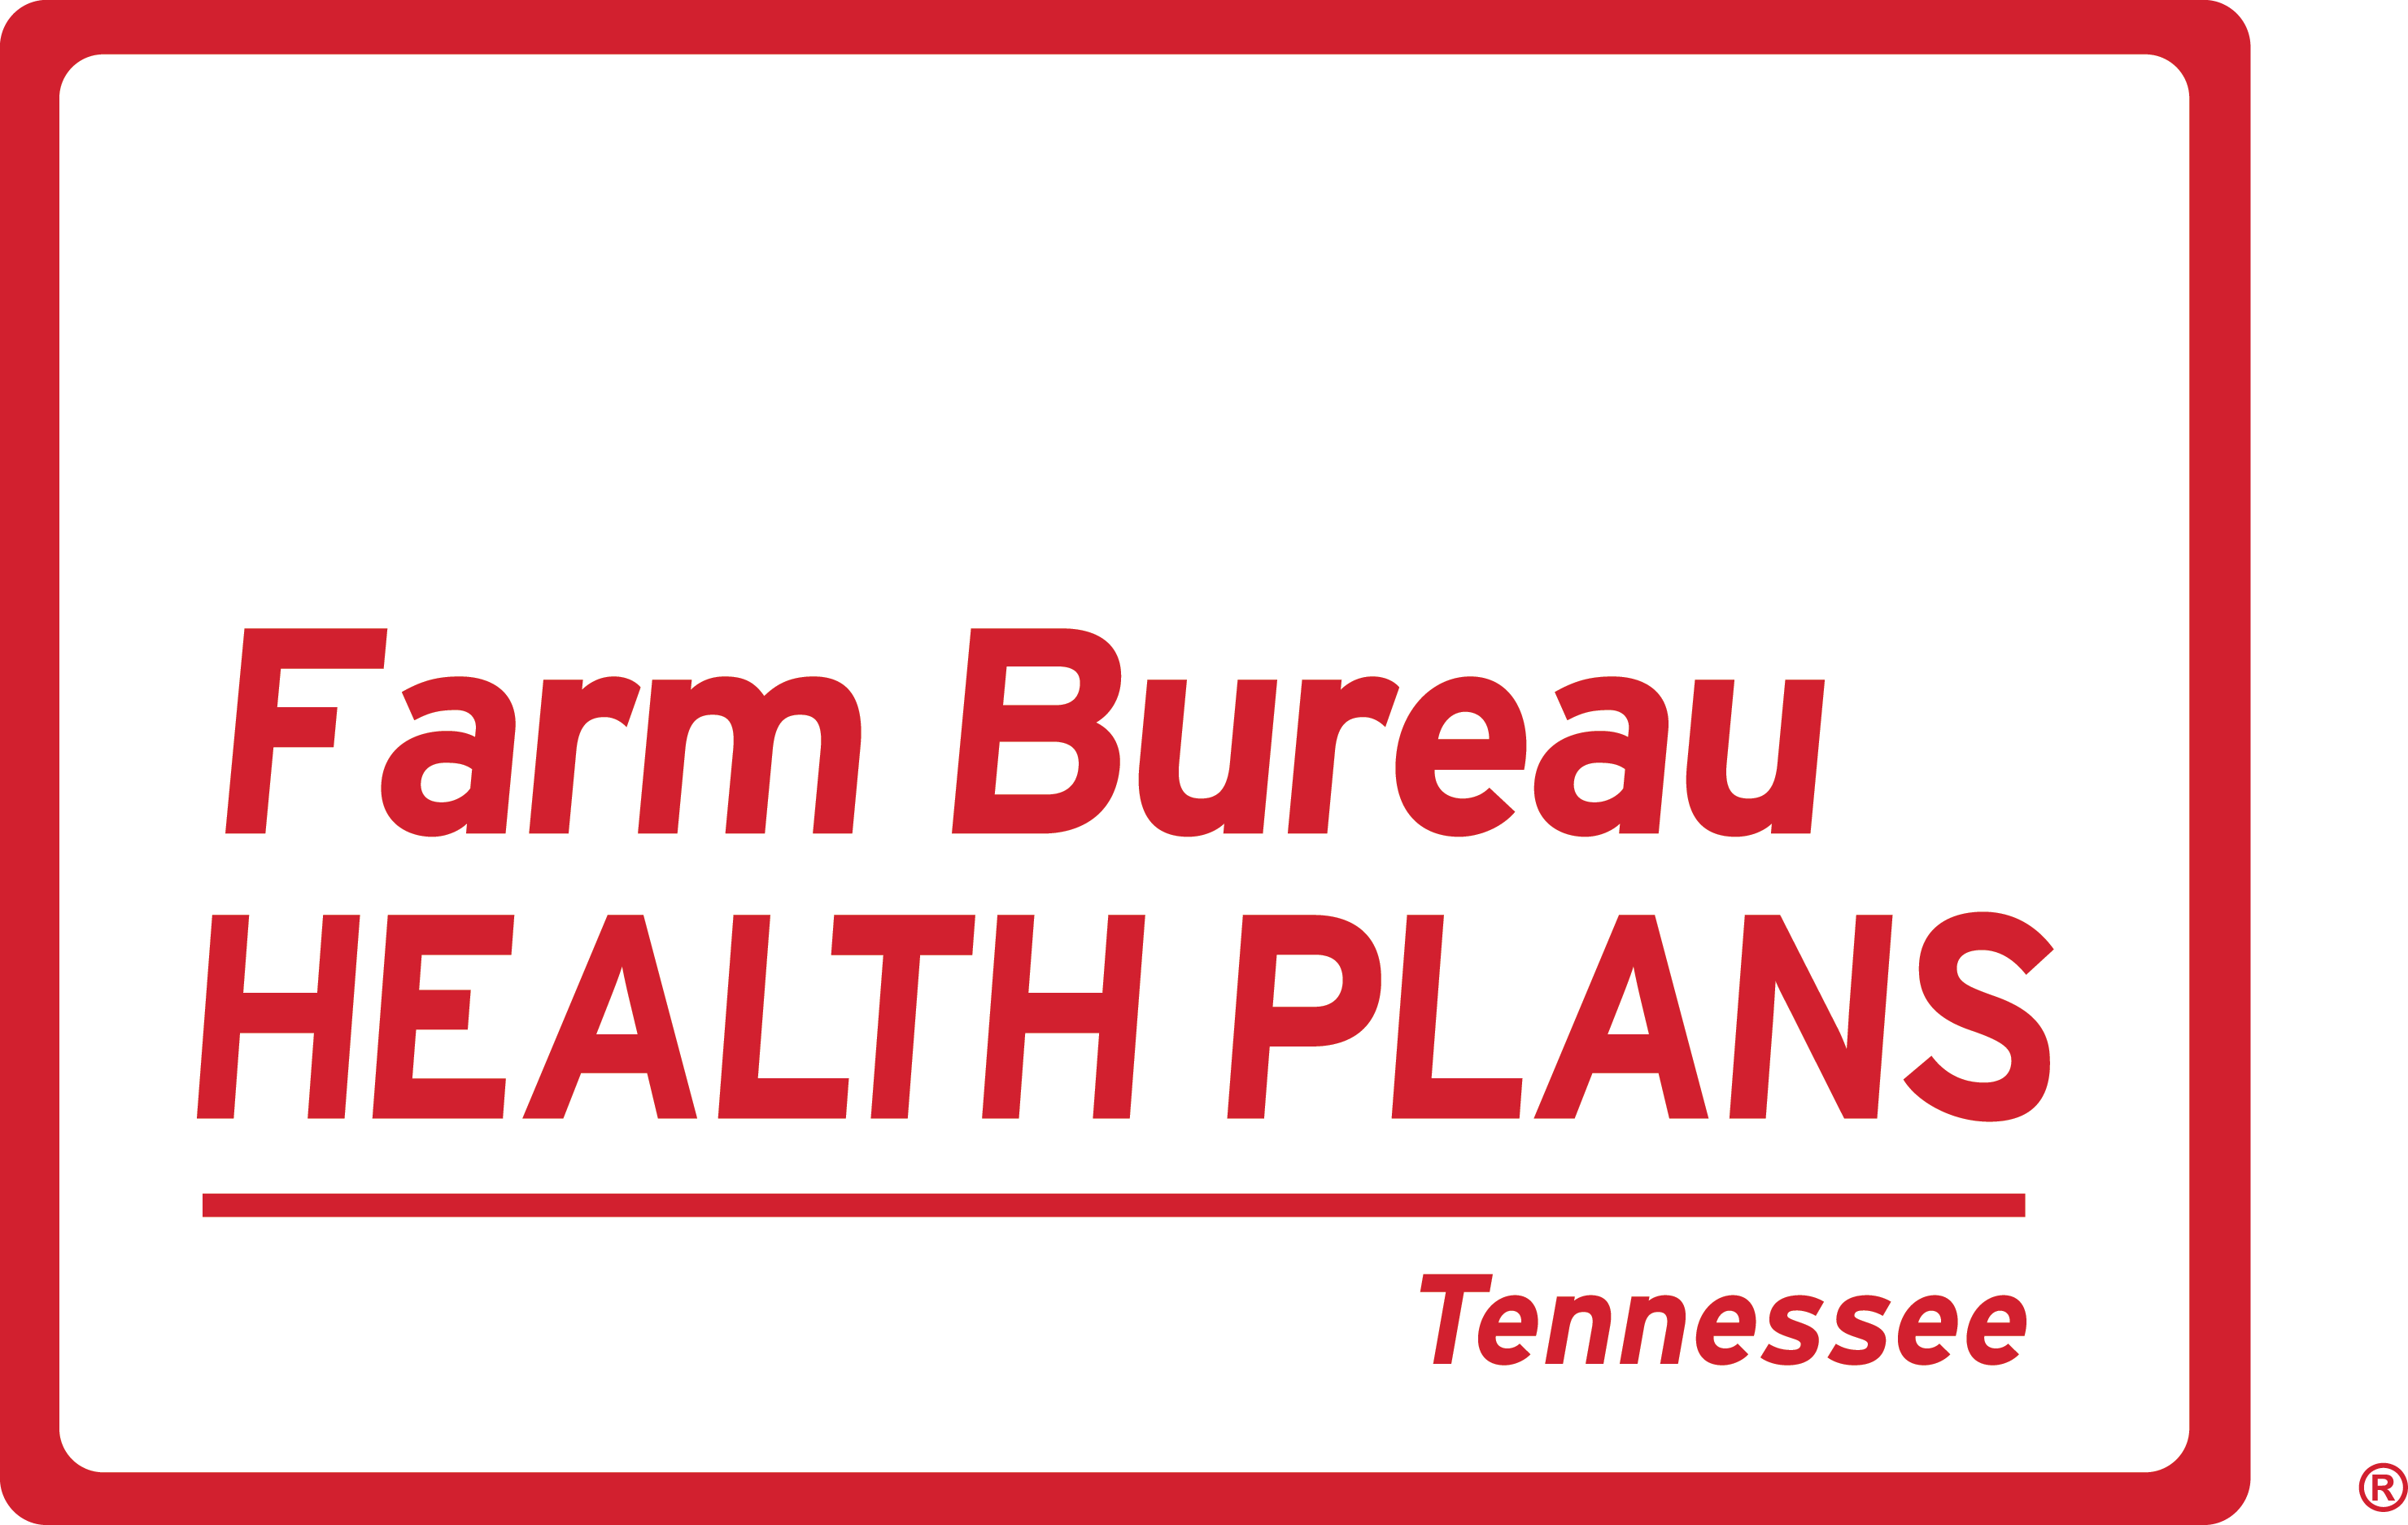 Farm Bureau Health Plans Tennessee